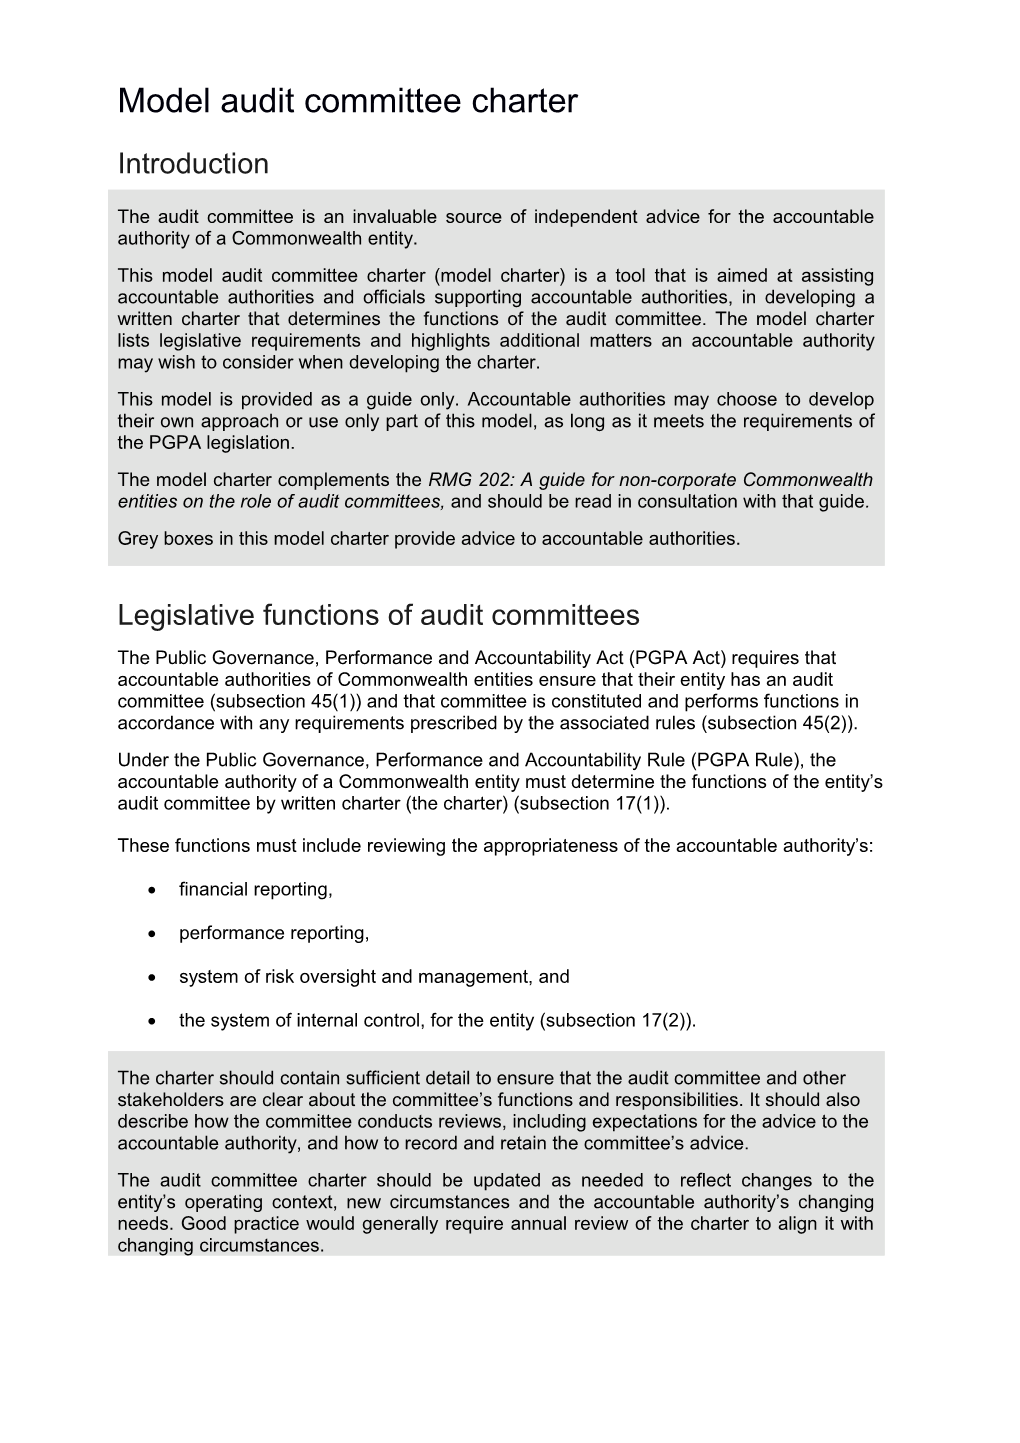 Legislativefunctionsofaudit Committees